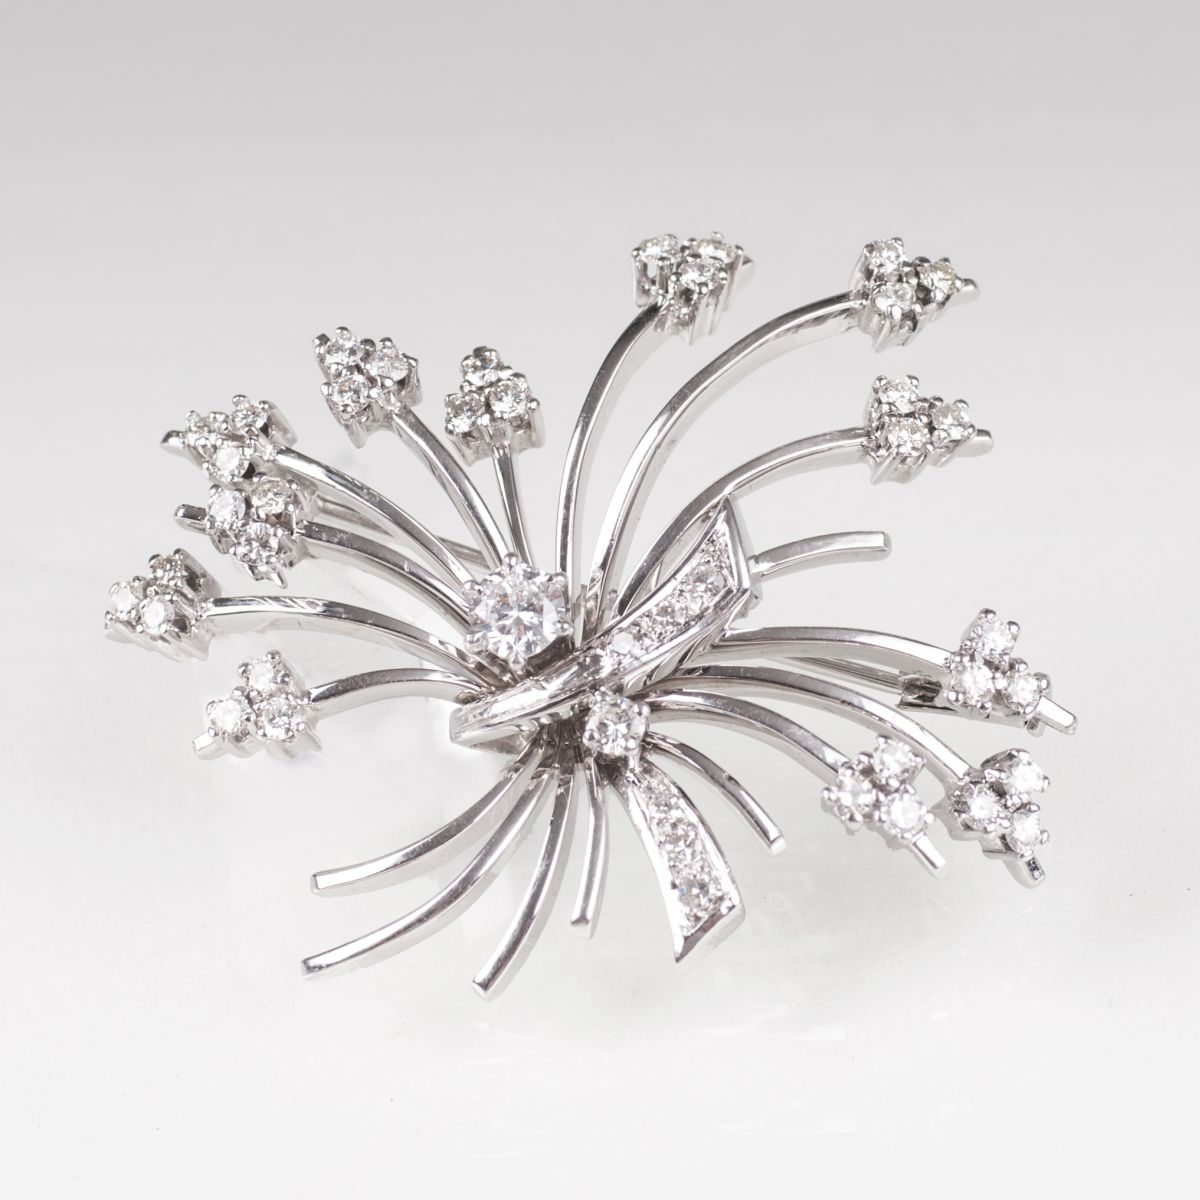 A flowershaped diamond brooch